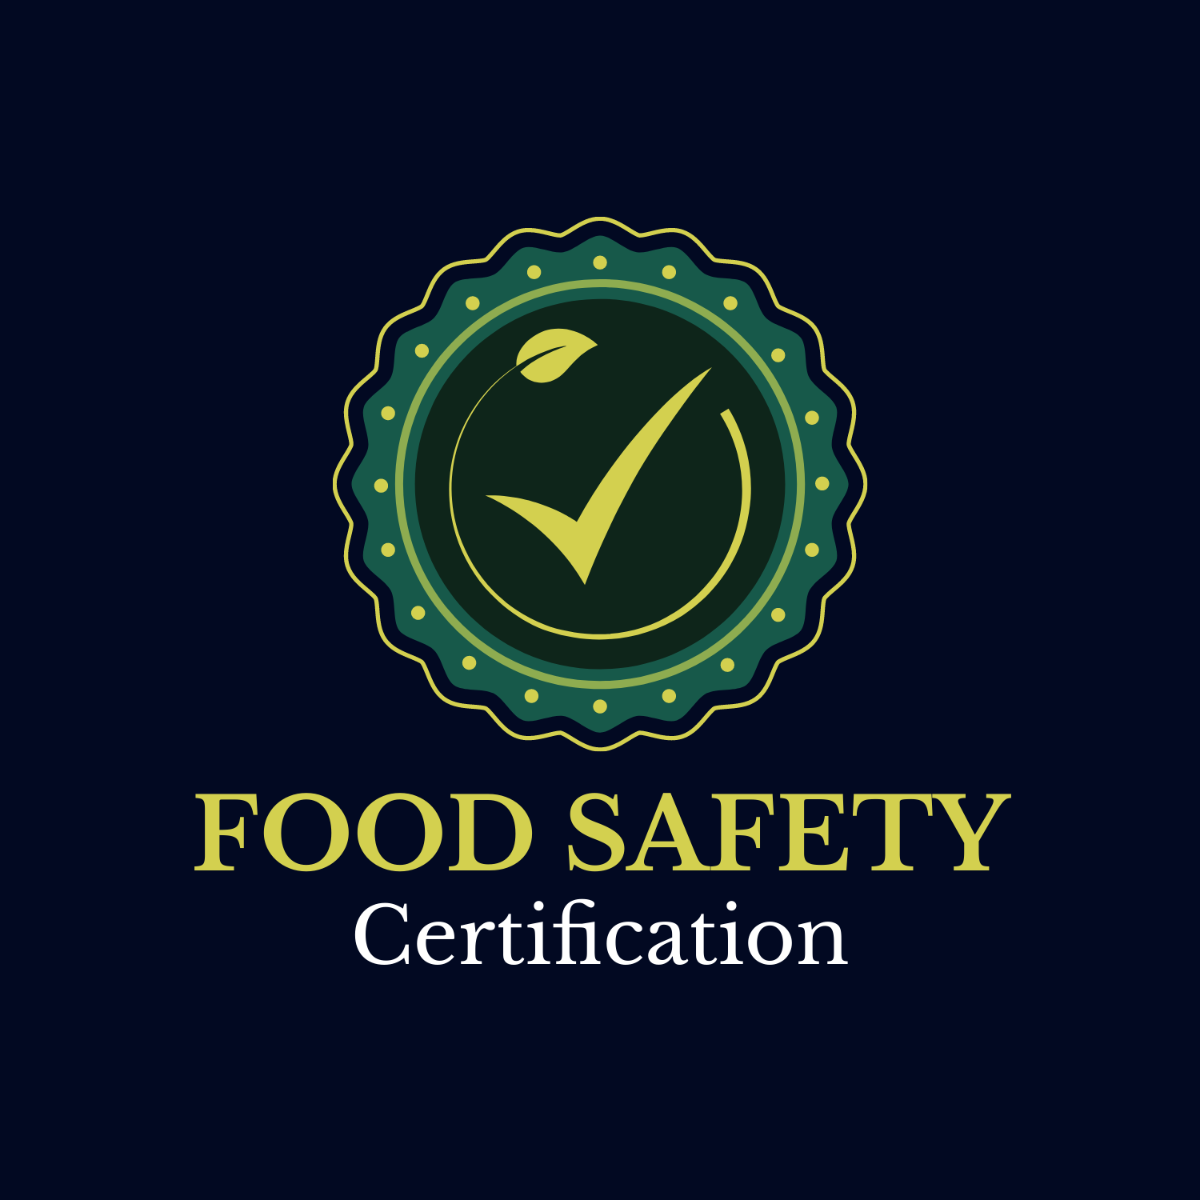 Food Safety Certification Logo